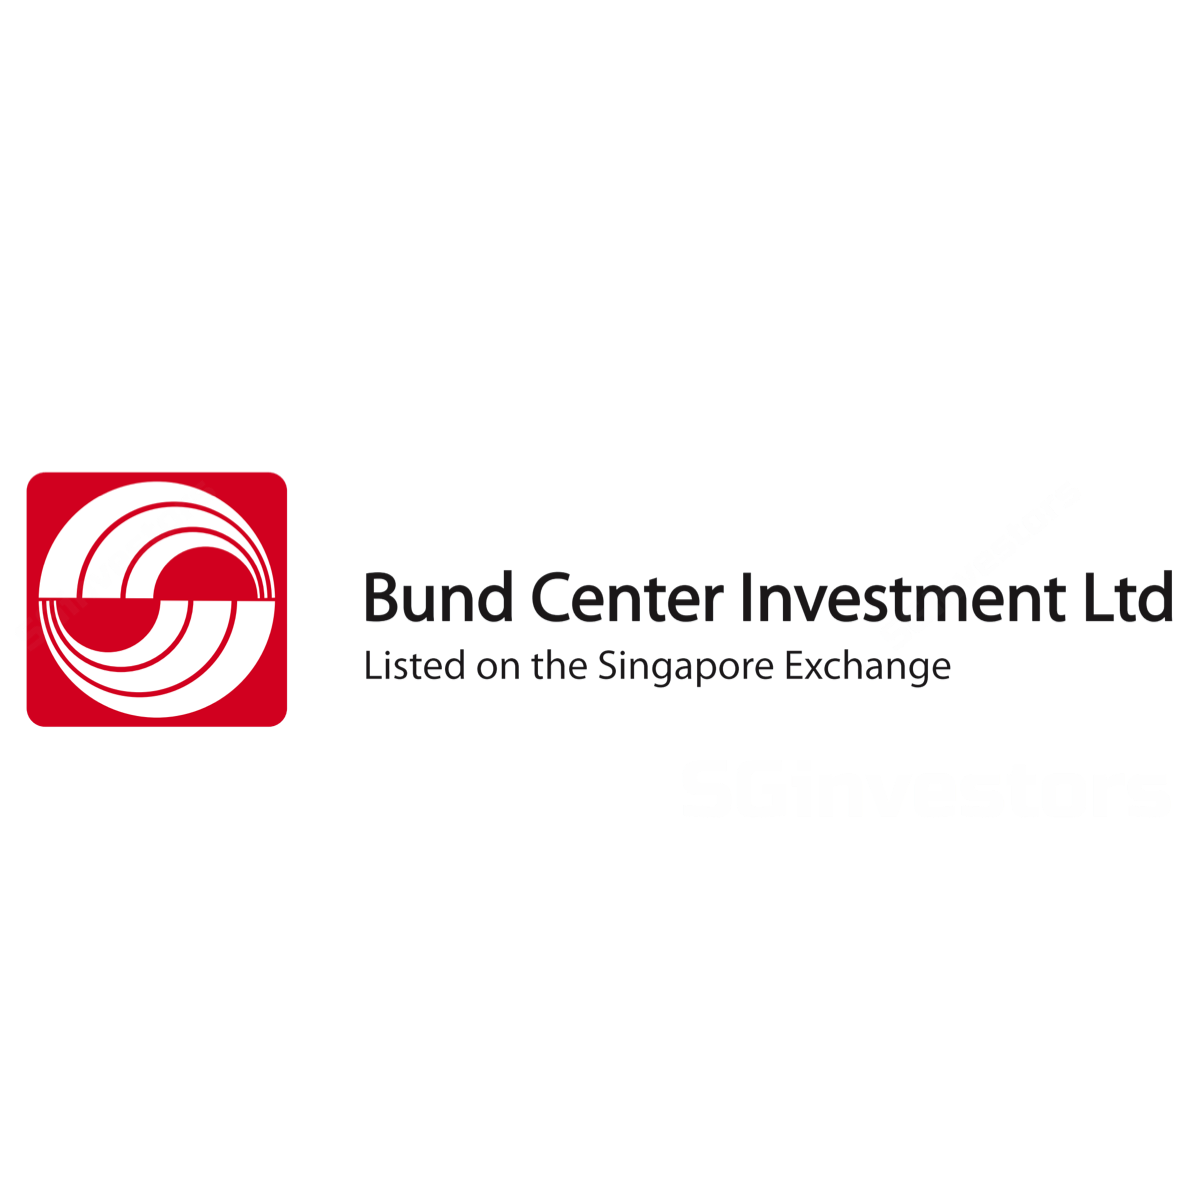 BUND CENTER INVESTMENT LTD (SGX:BTE) @ SGinvestors.io